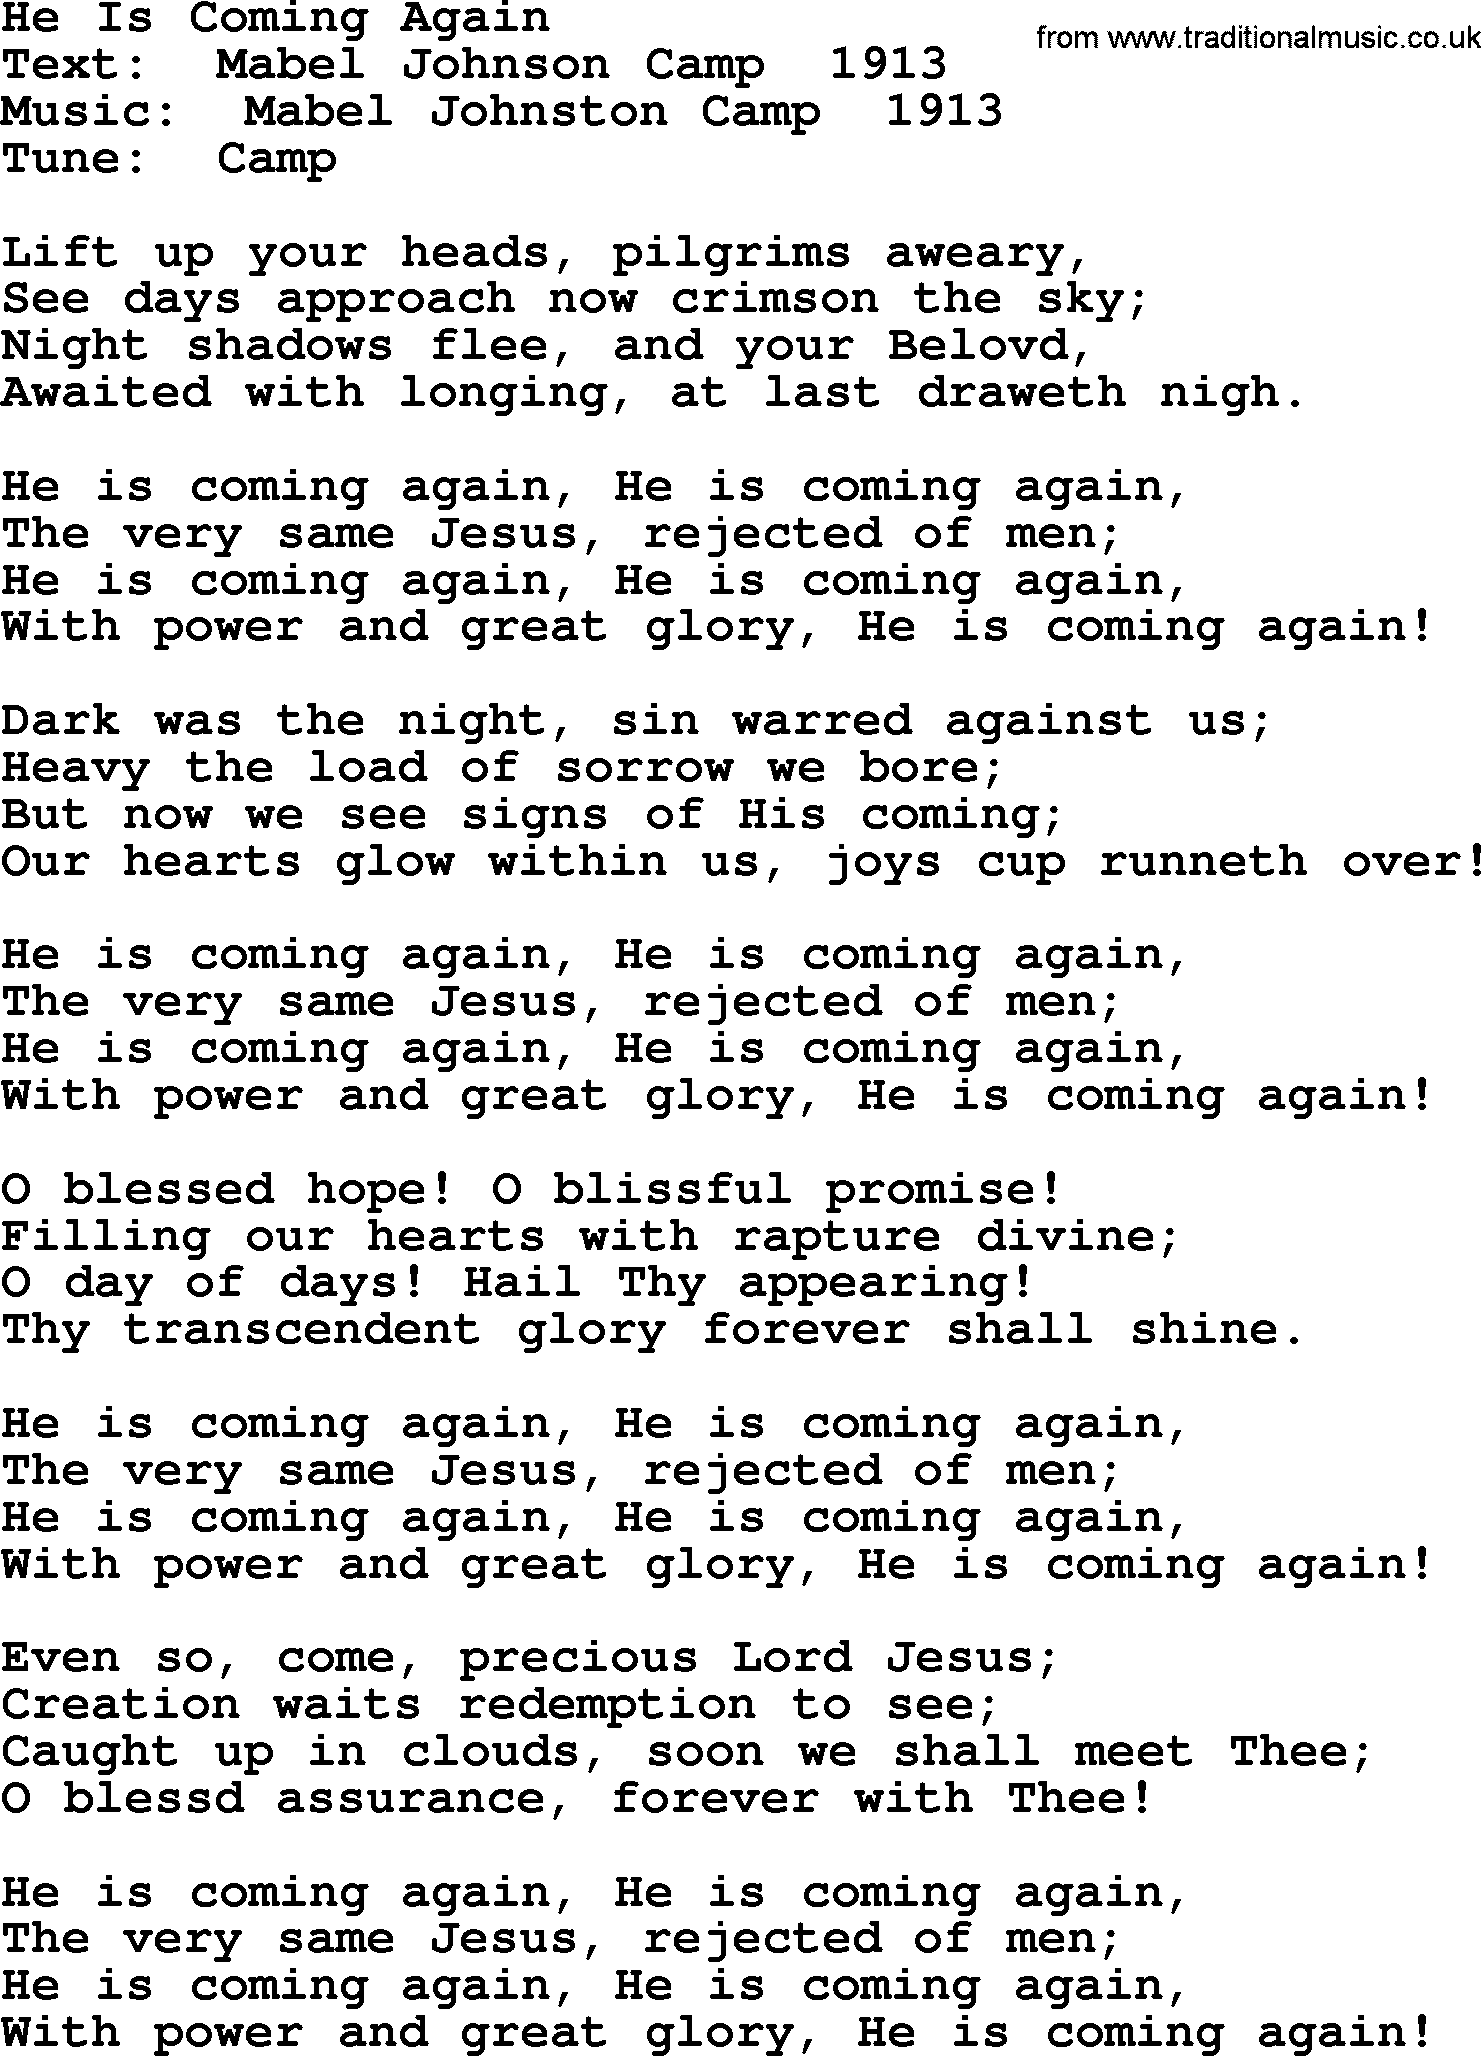 Top 500 Hymn: He Is Coming Again, lyrics